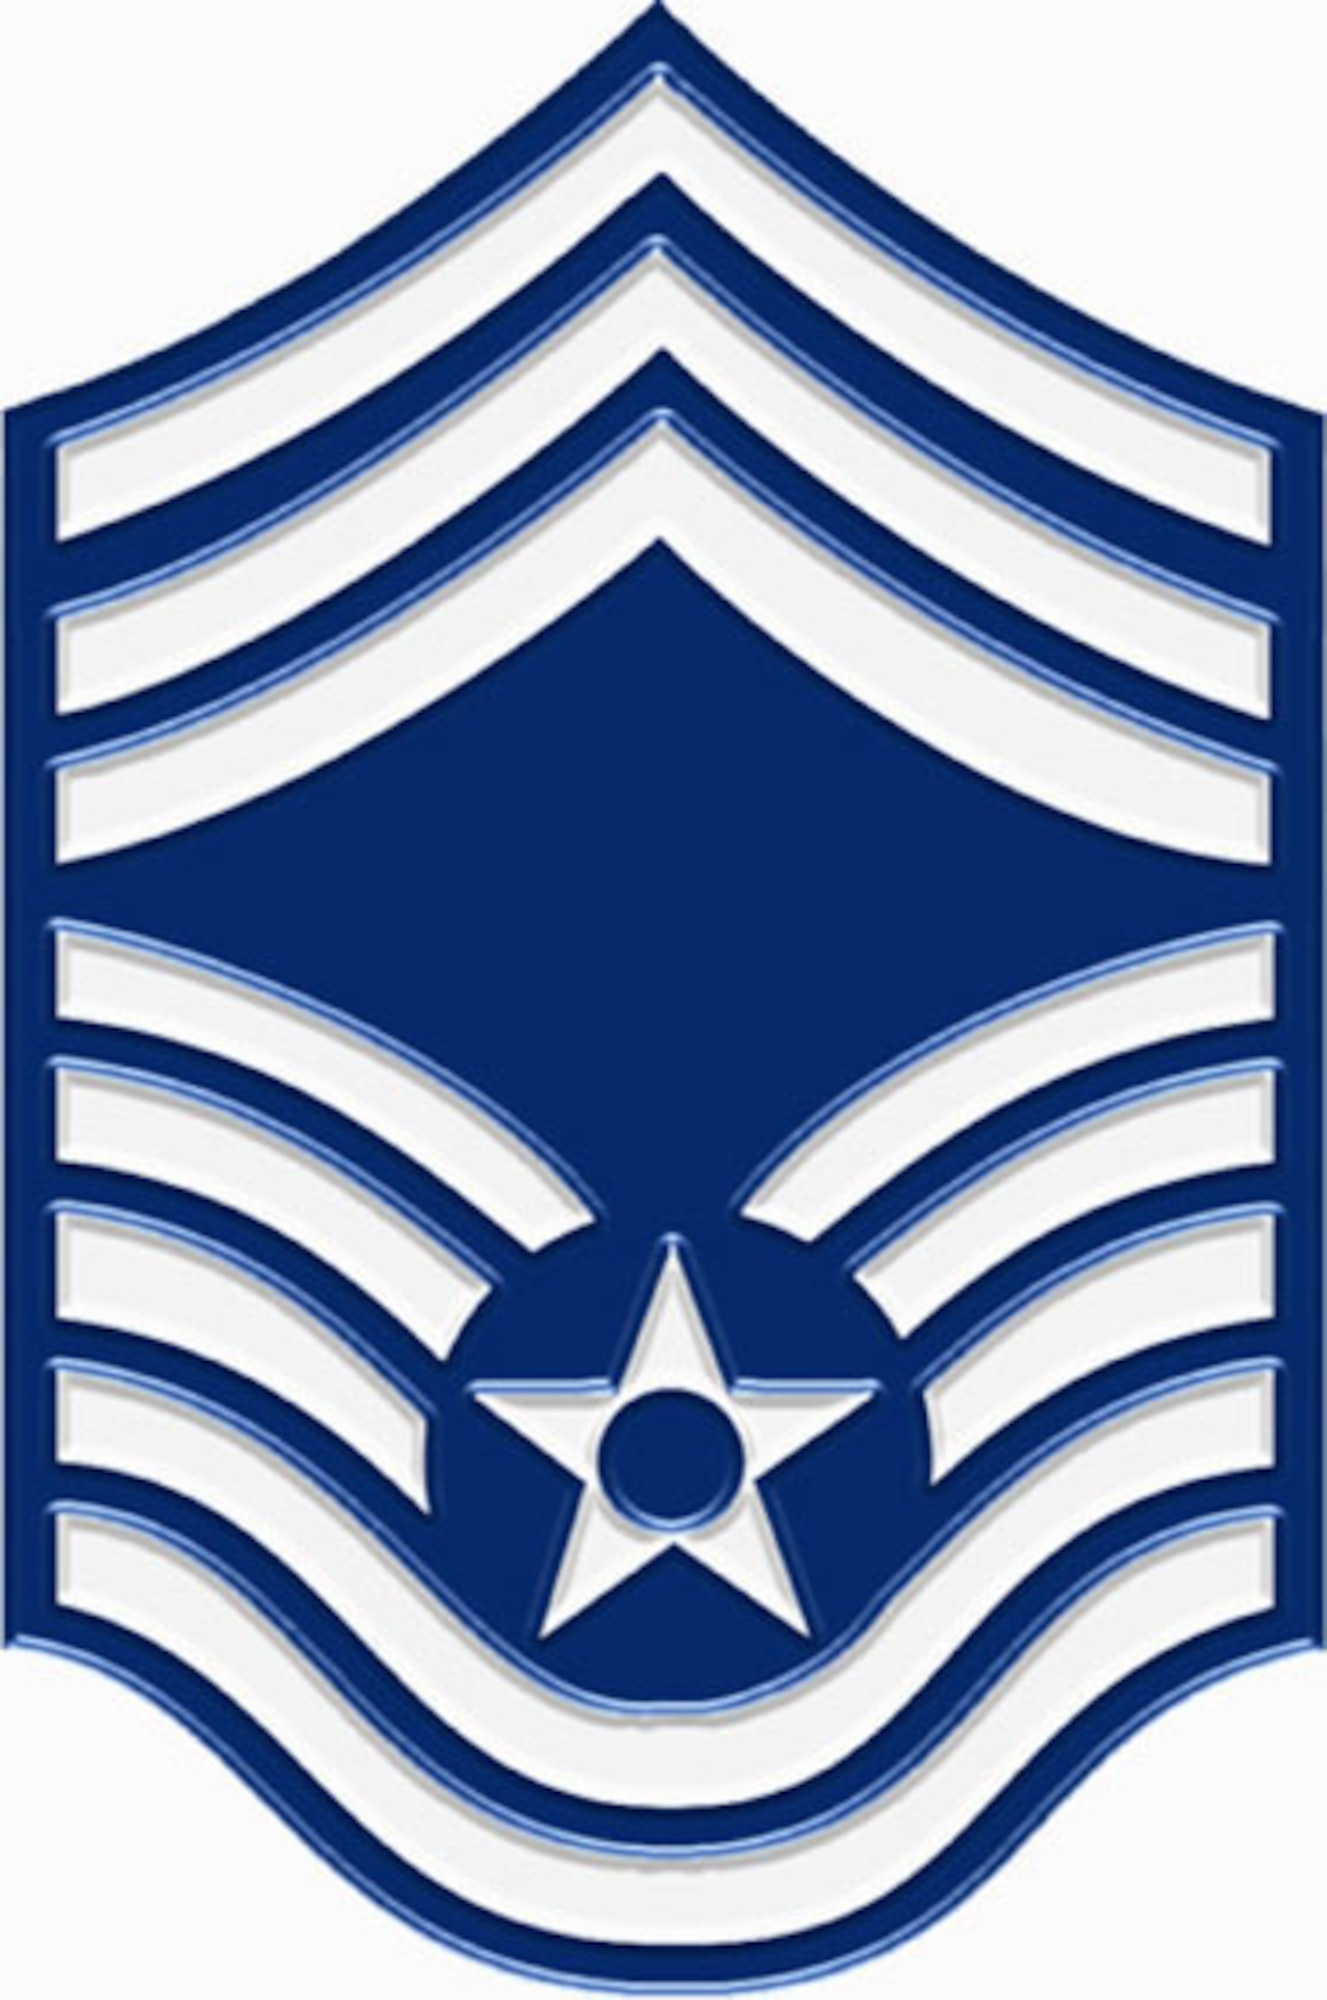 Chief Master Sergeant (E-9)